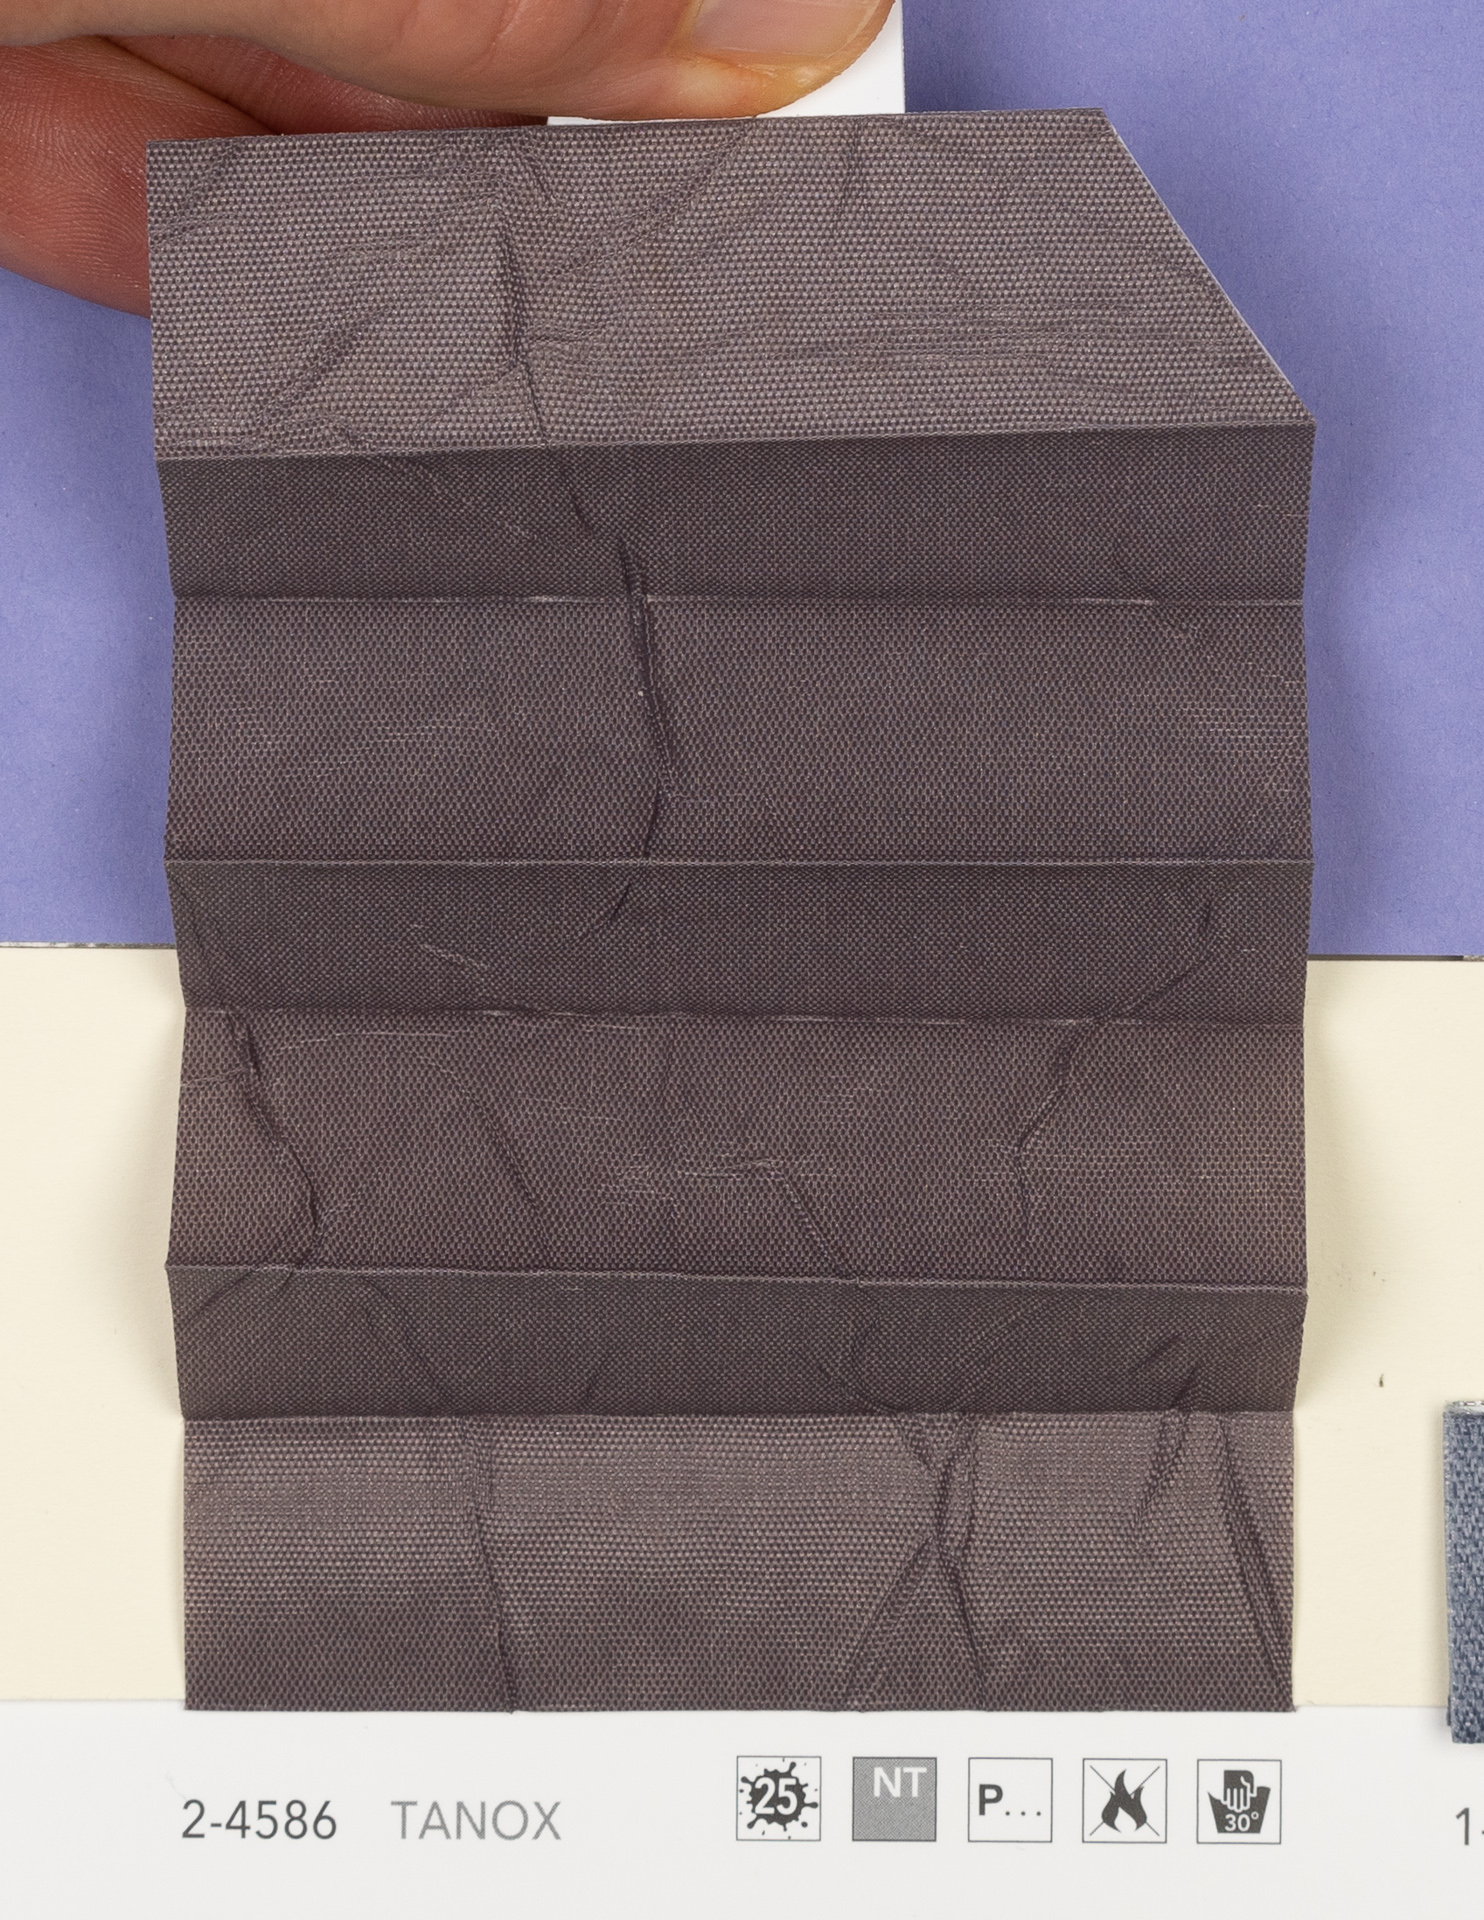 MHZ Plissee Stoff Muster aus der Farbkarte "19 Flame Retardant" | Material: 100 % PES